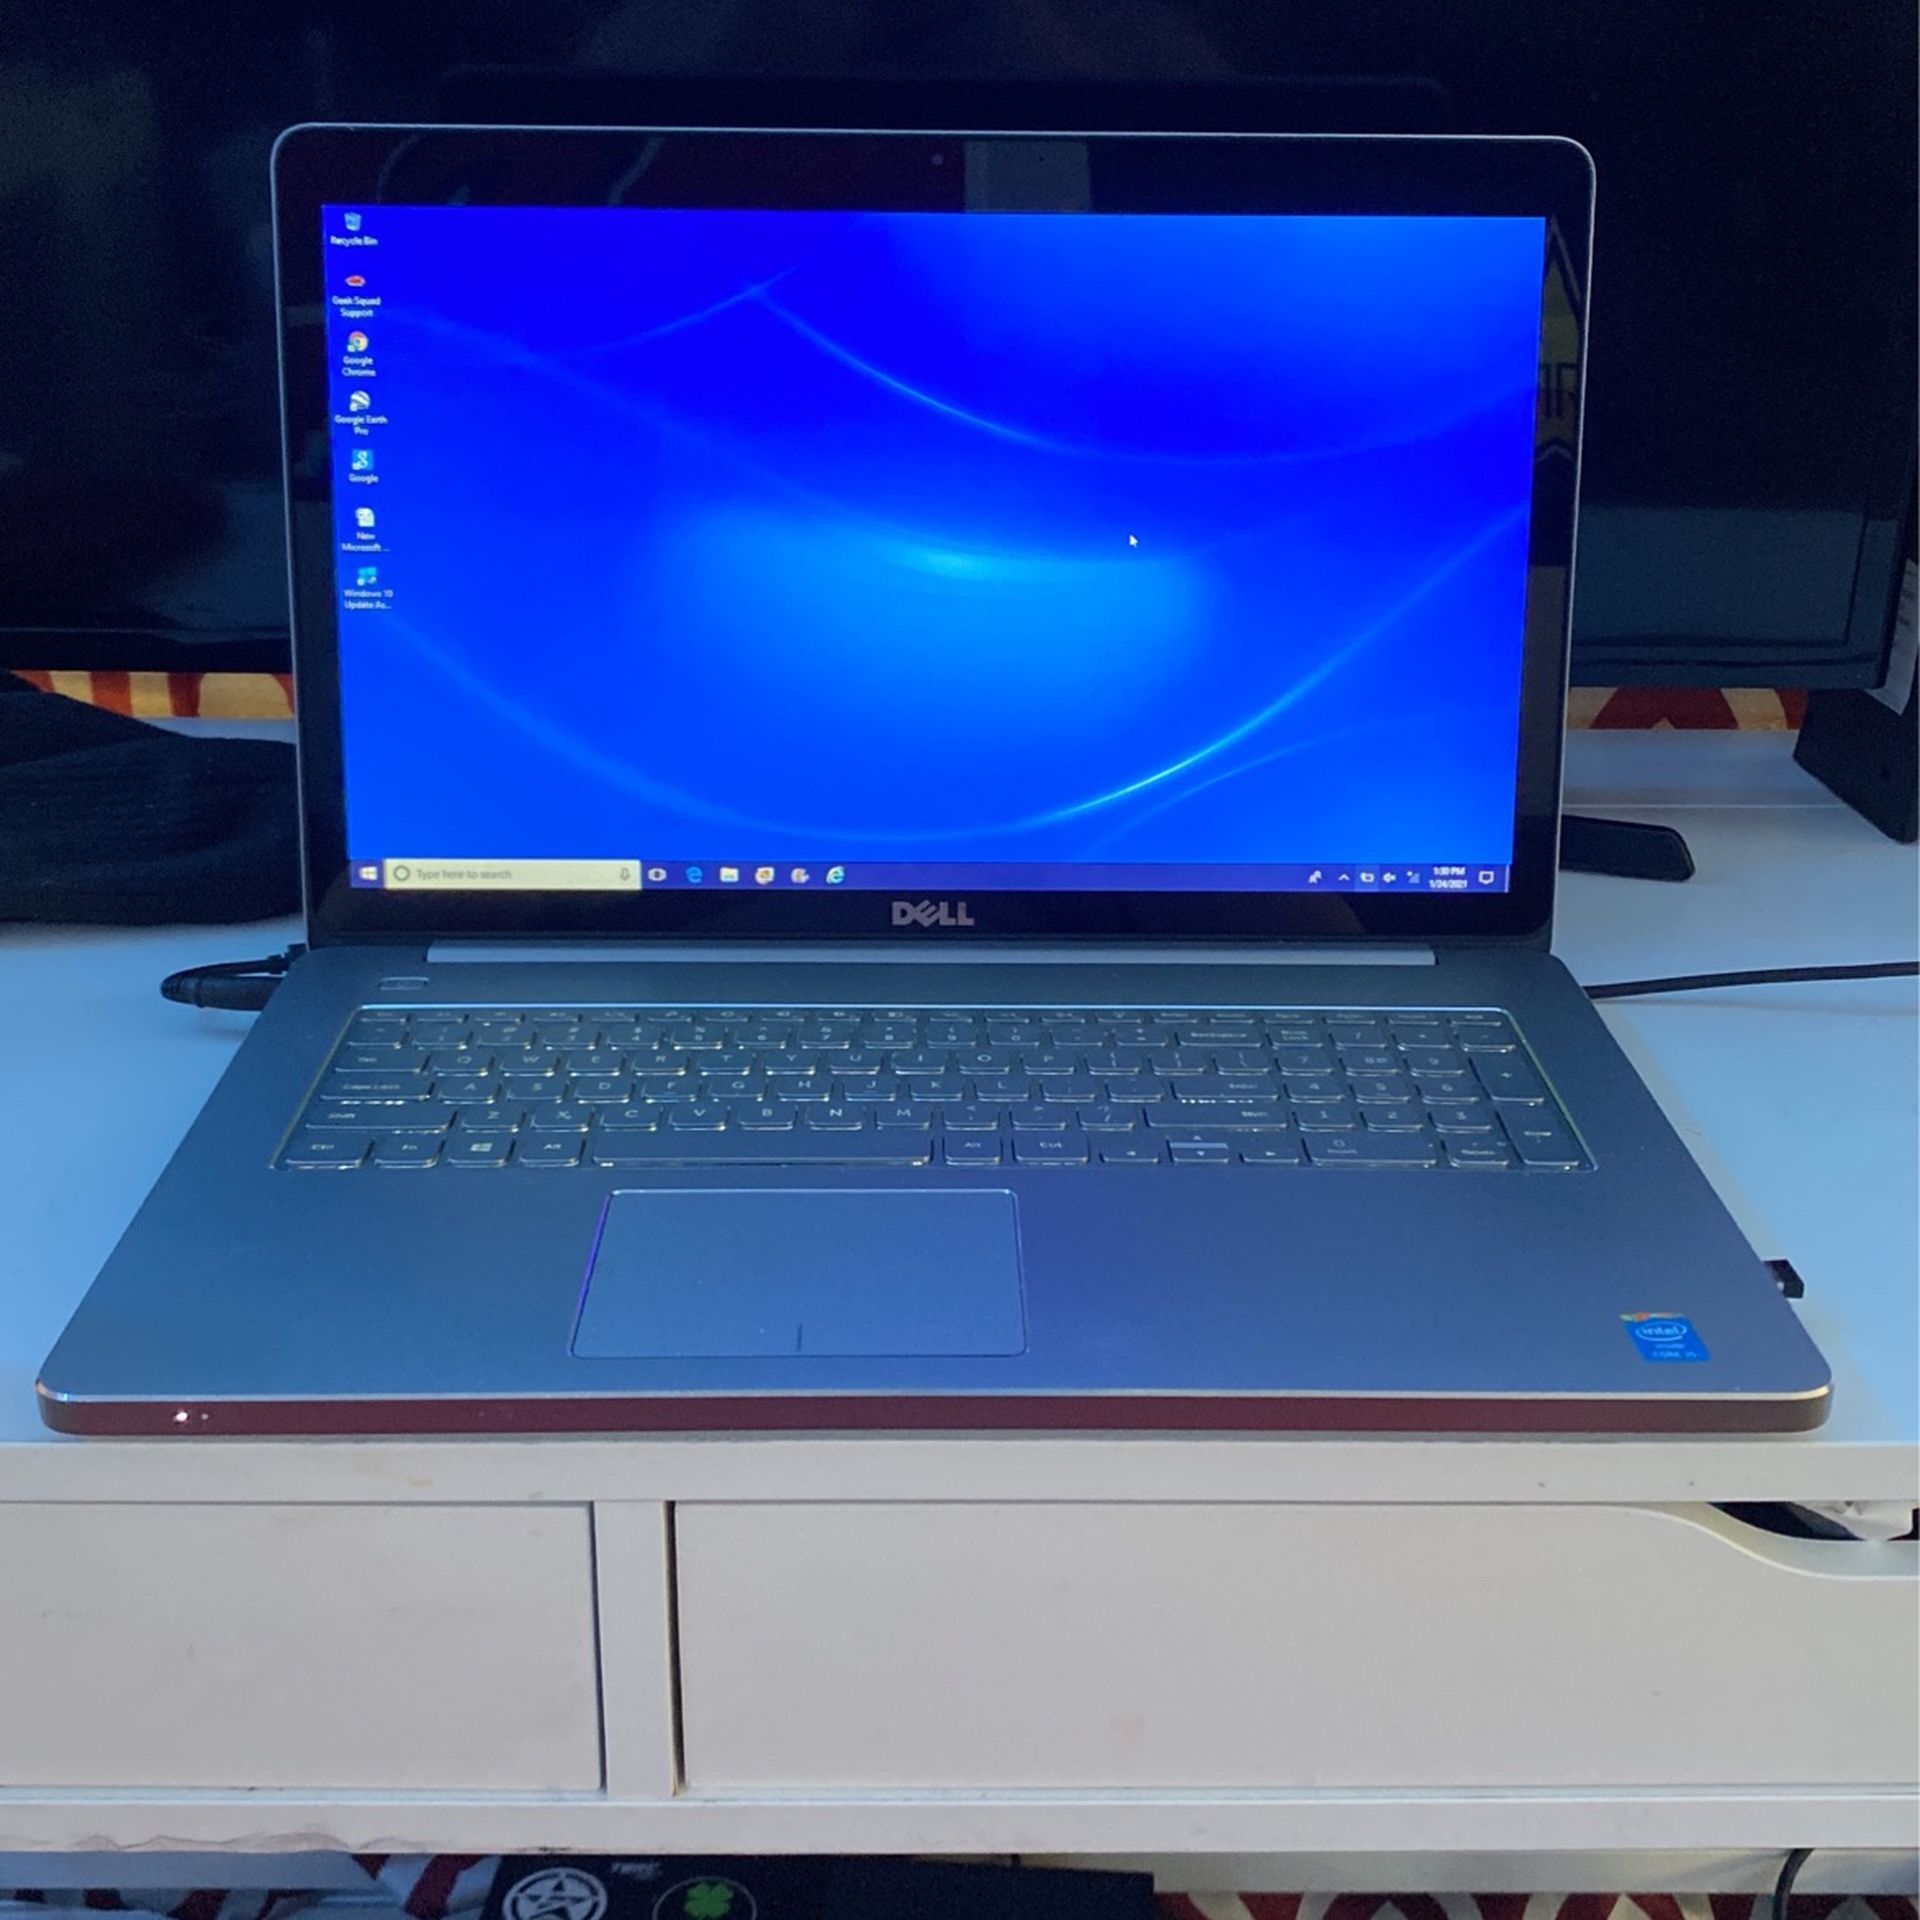 Dell touchscreen laptop